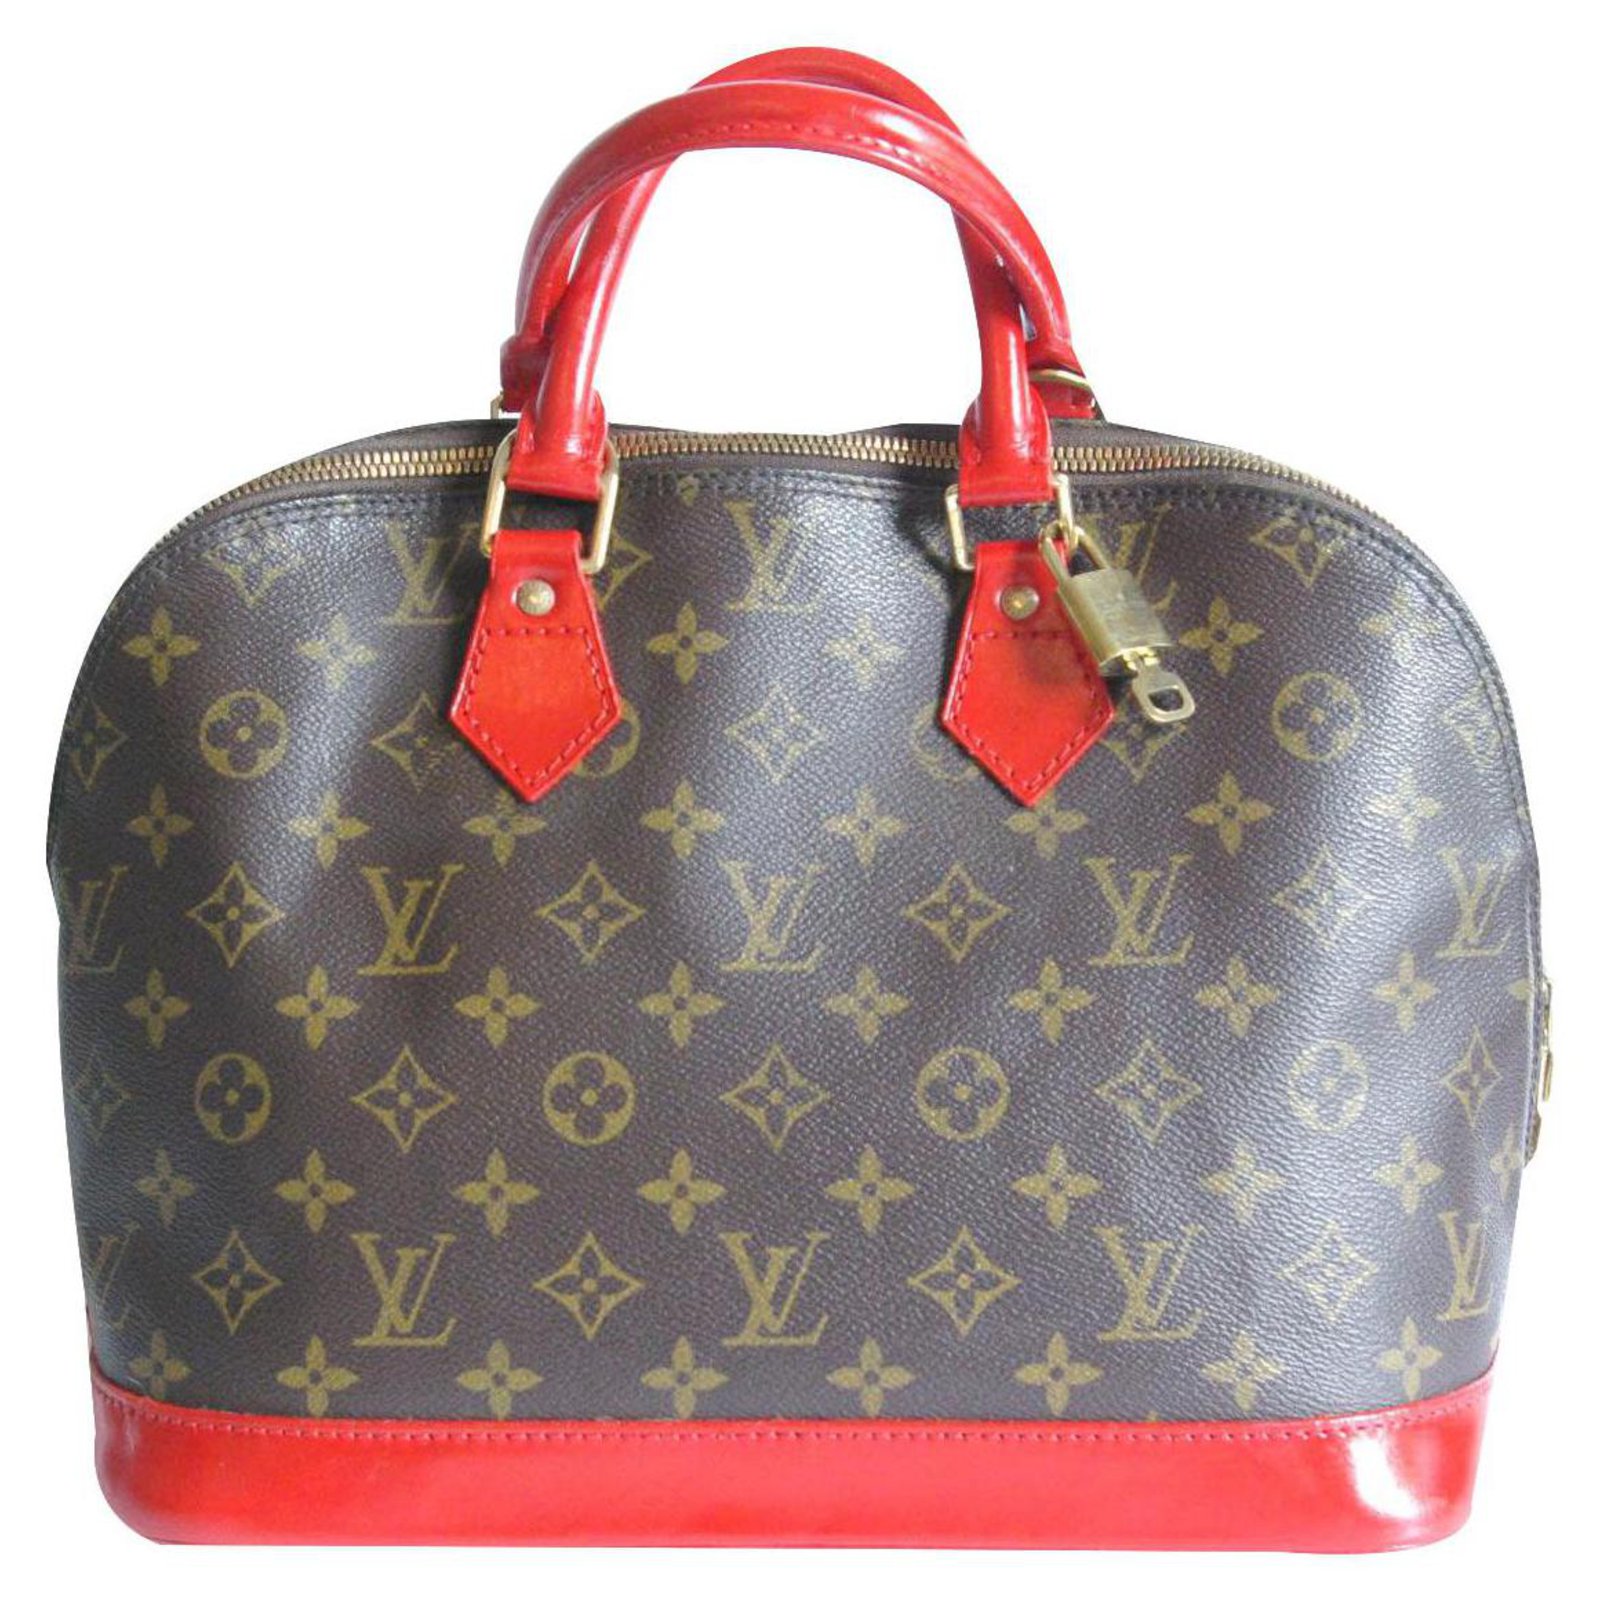 Louis Vuitton Red Alma PM Bag